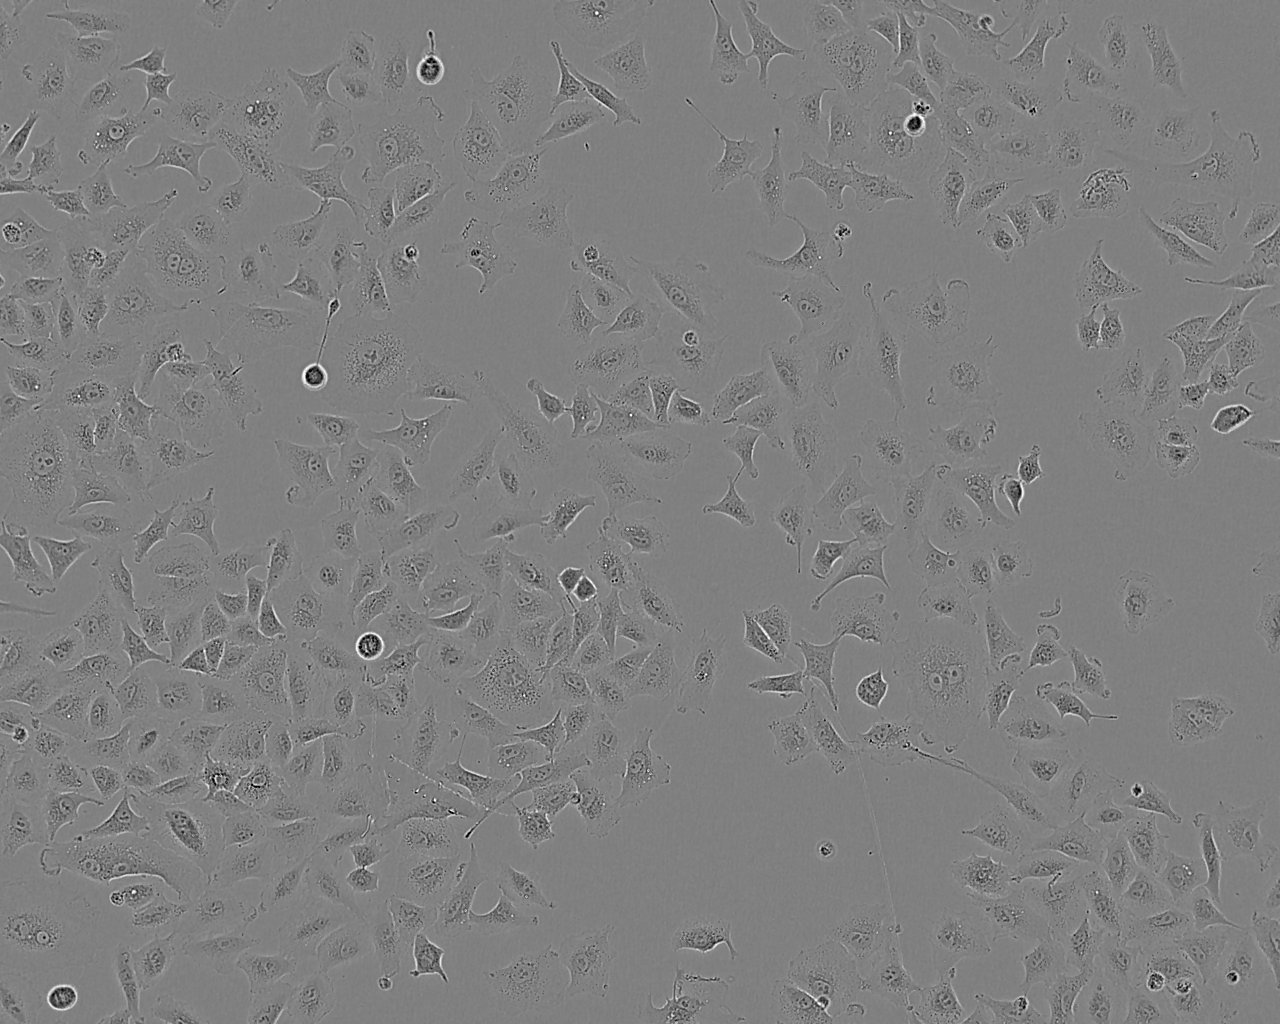 NCI-H2227 Cell|人小细胞肺癌细胞,NCI-H2227 Cell